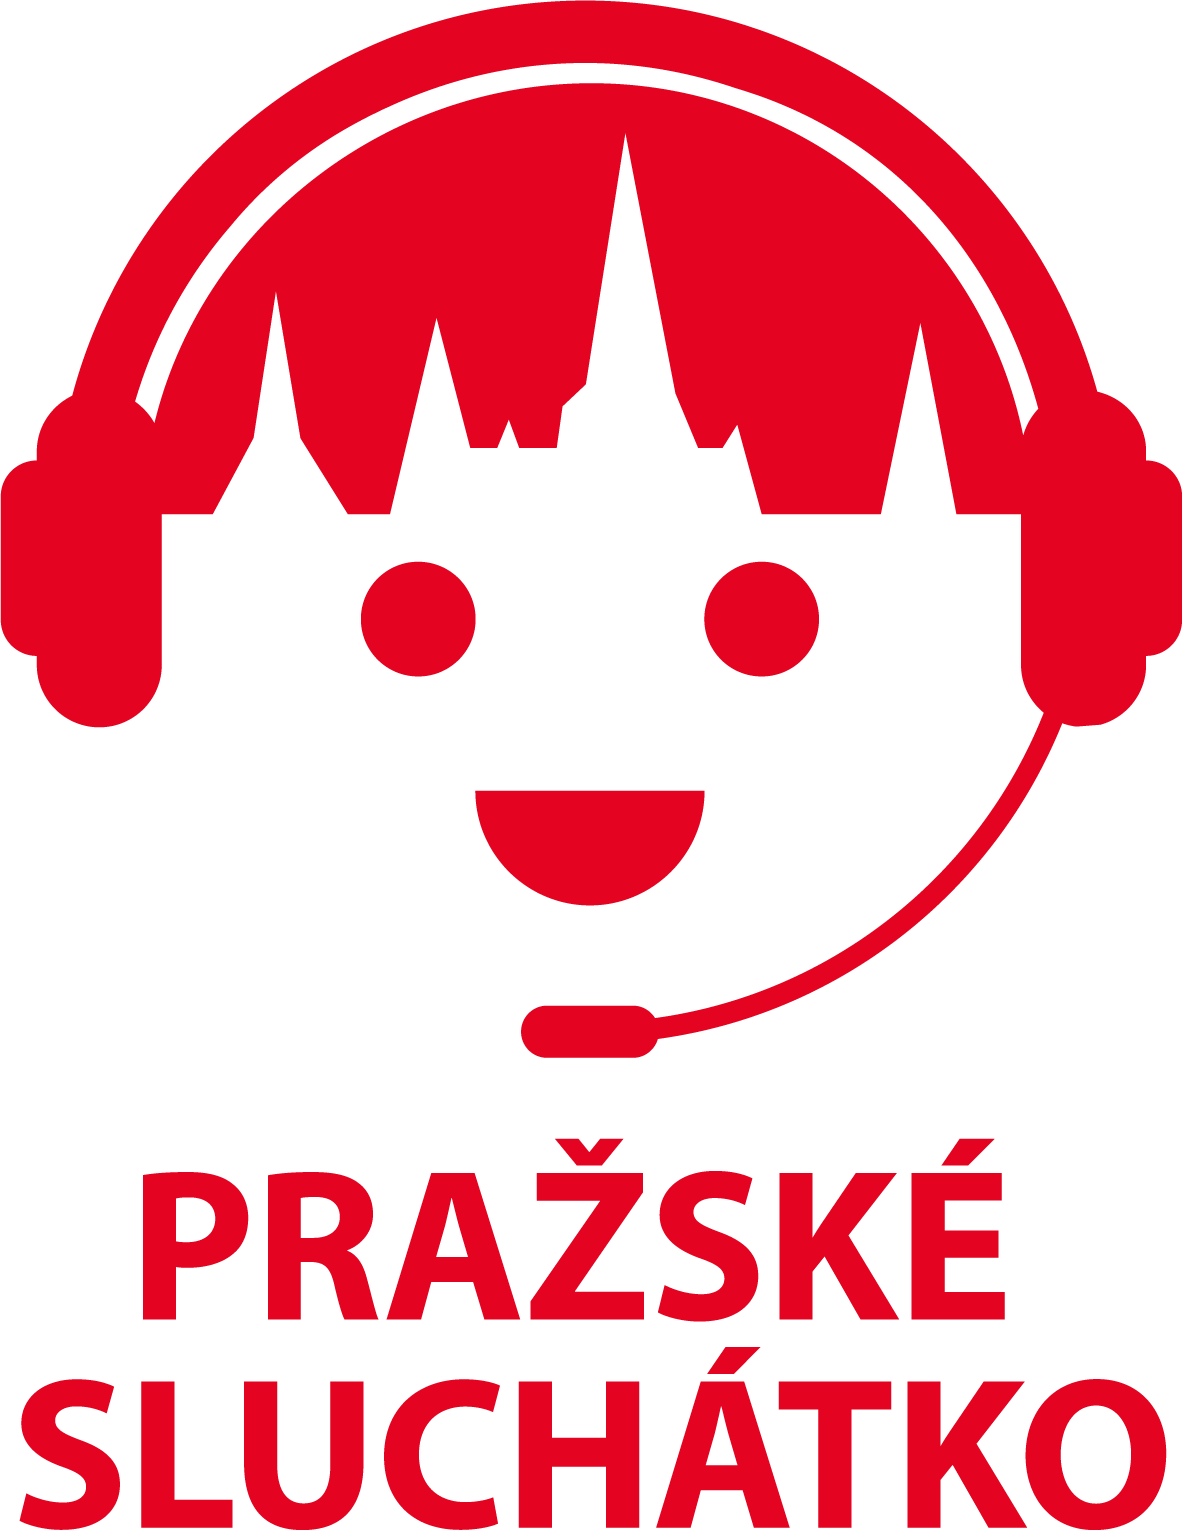 Pražské sluchátko - logo